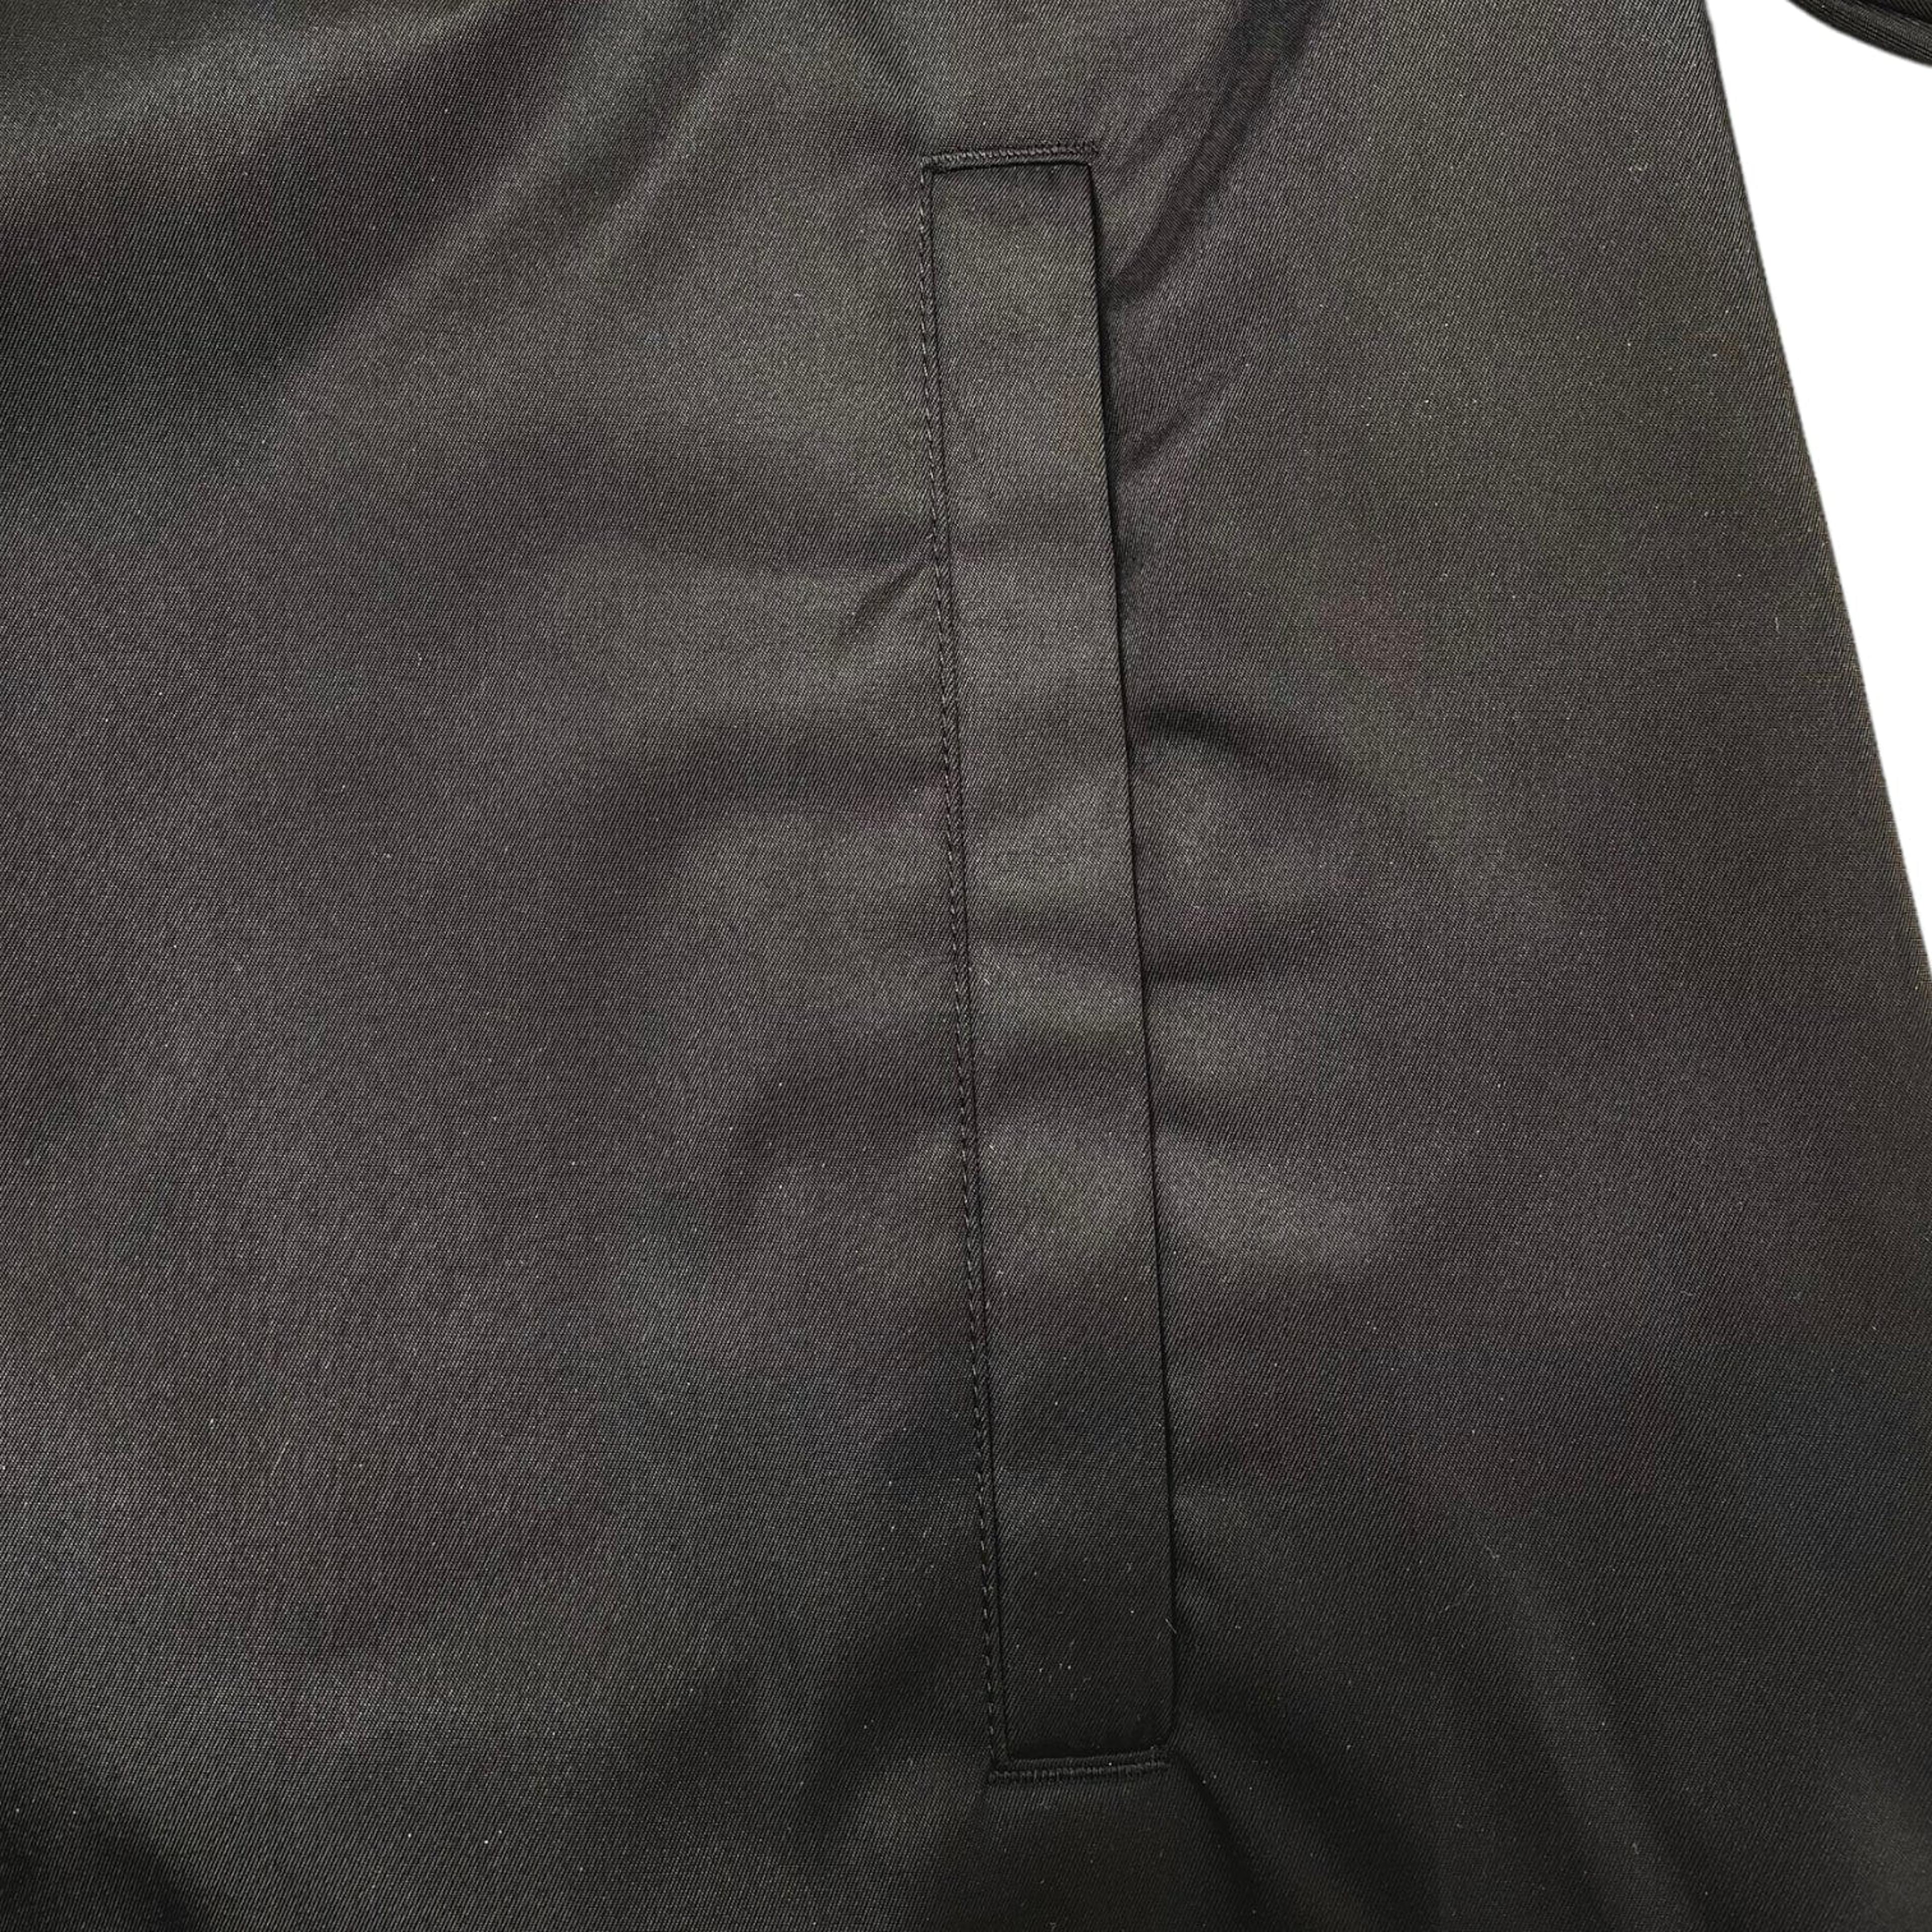 Alternate View 3 of Prada Re-Nylon Button Up Short Sleeve Tee Shirt Black Pre-Owned